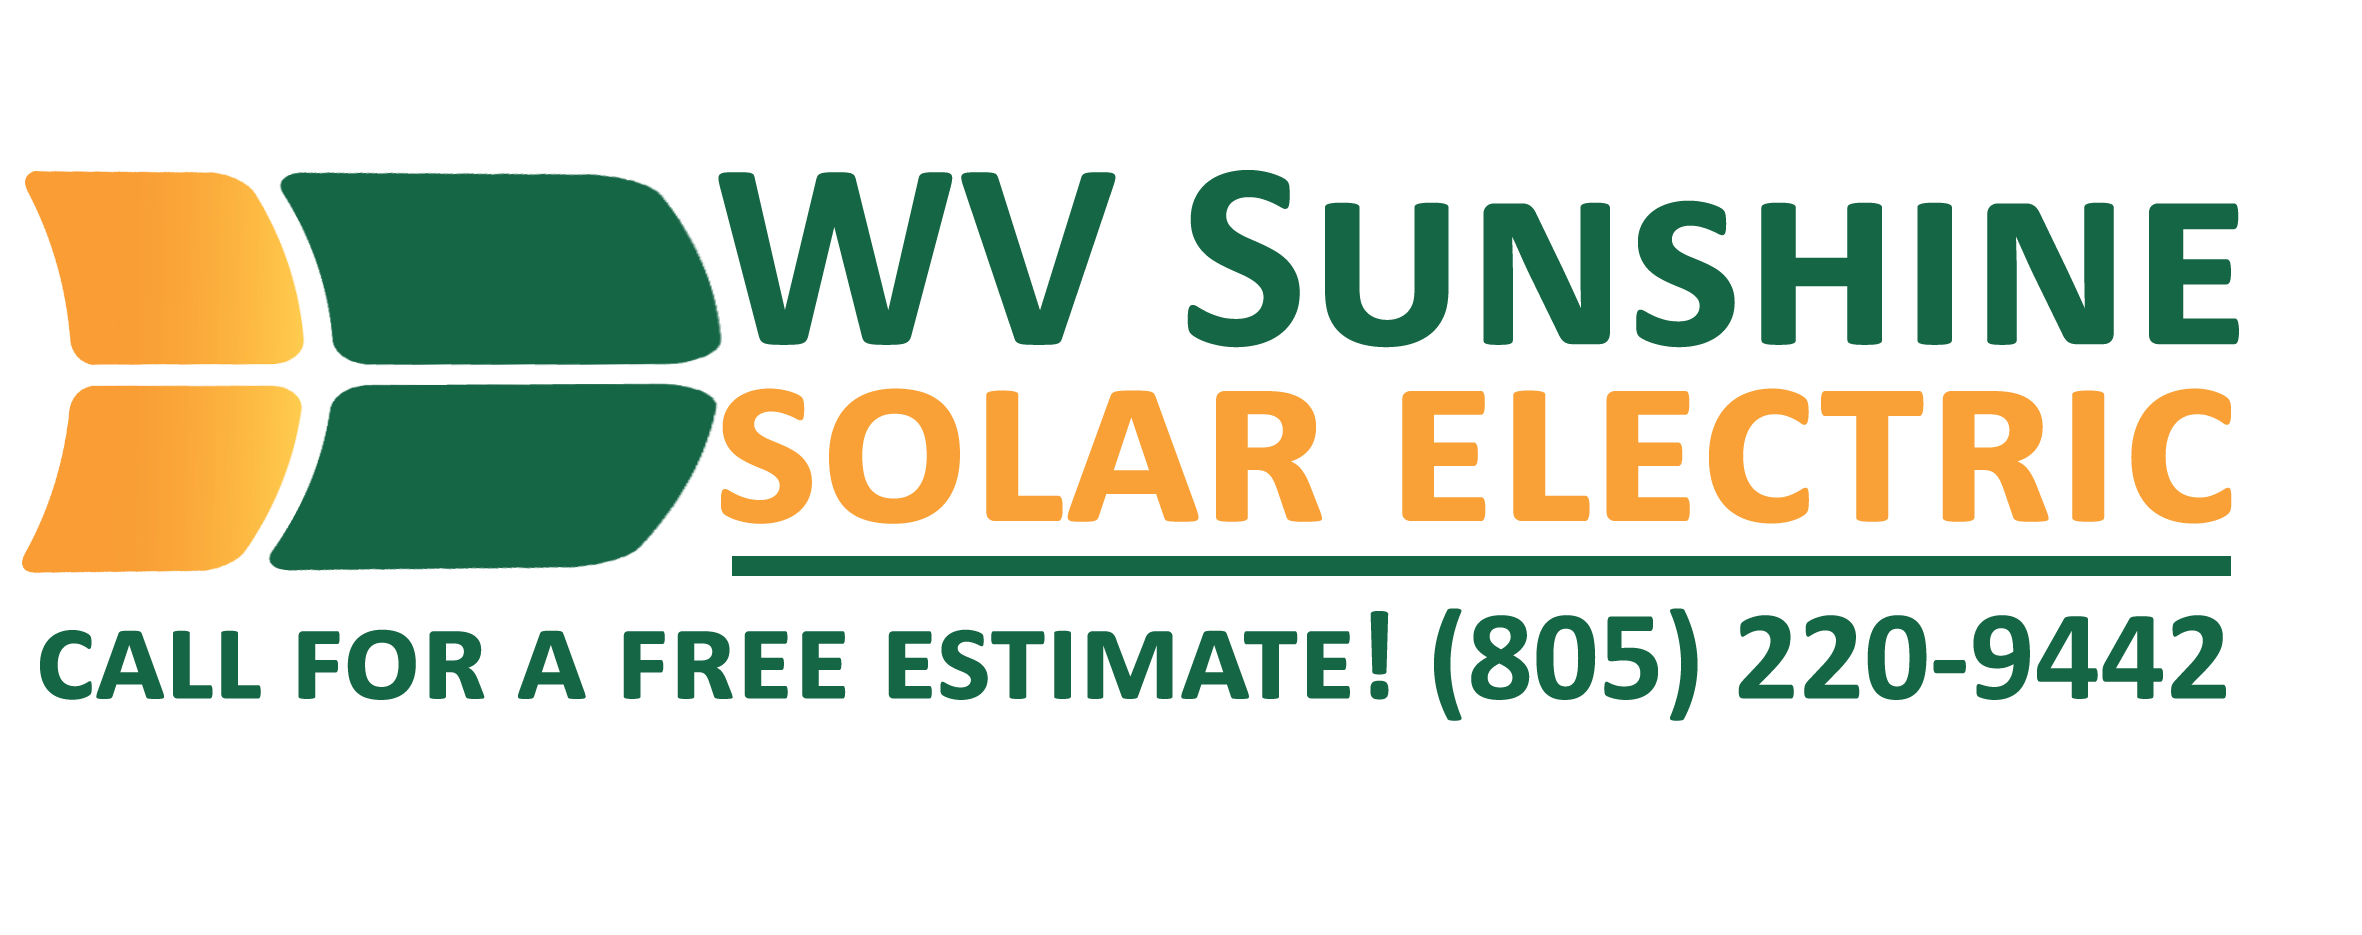 wv sunshine solar electric logo